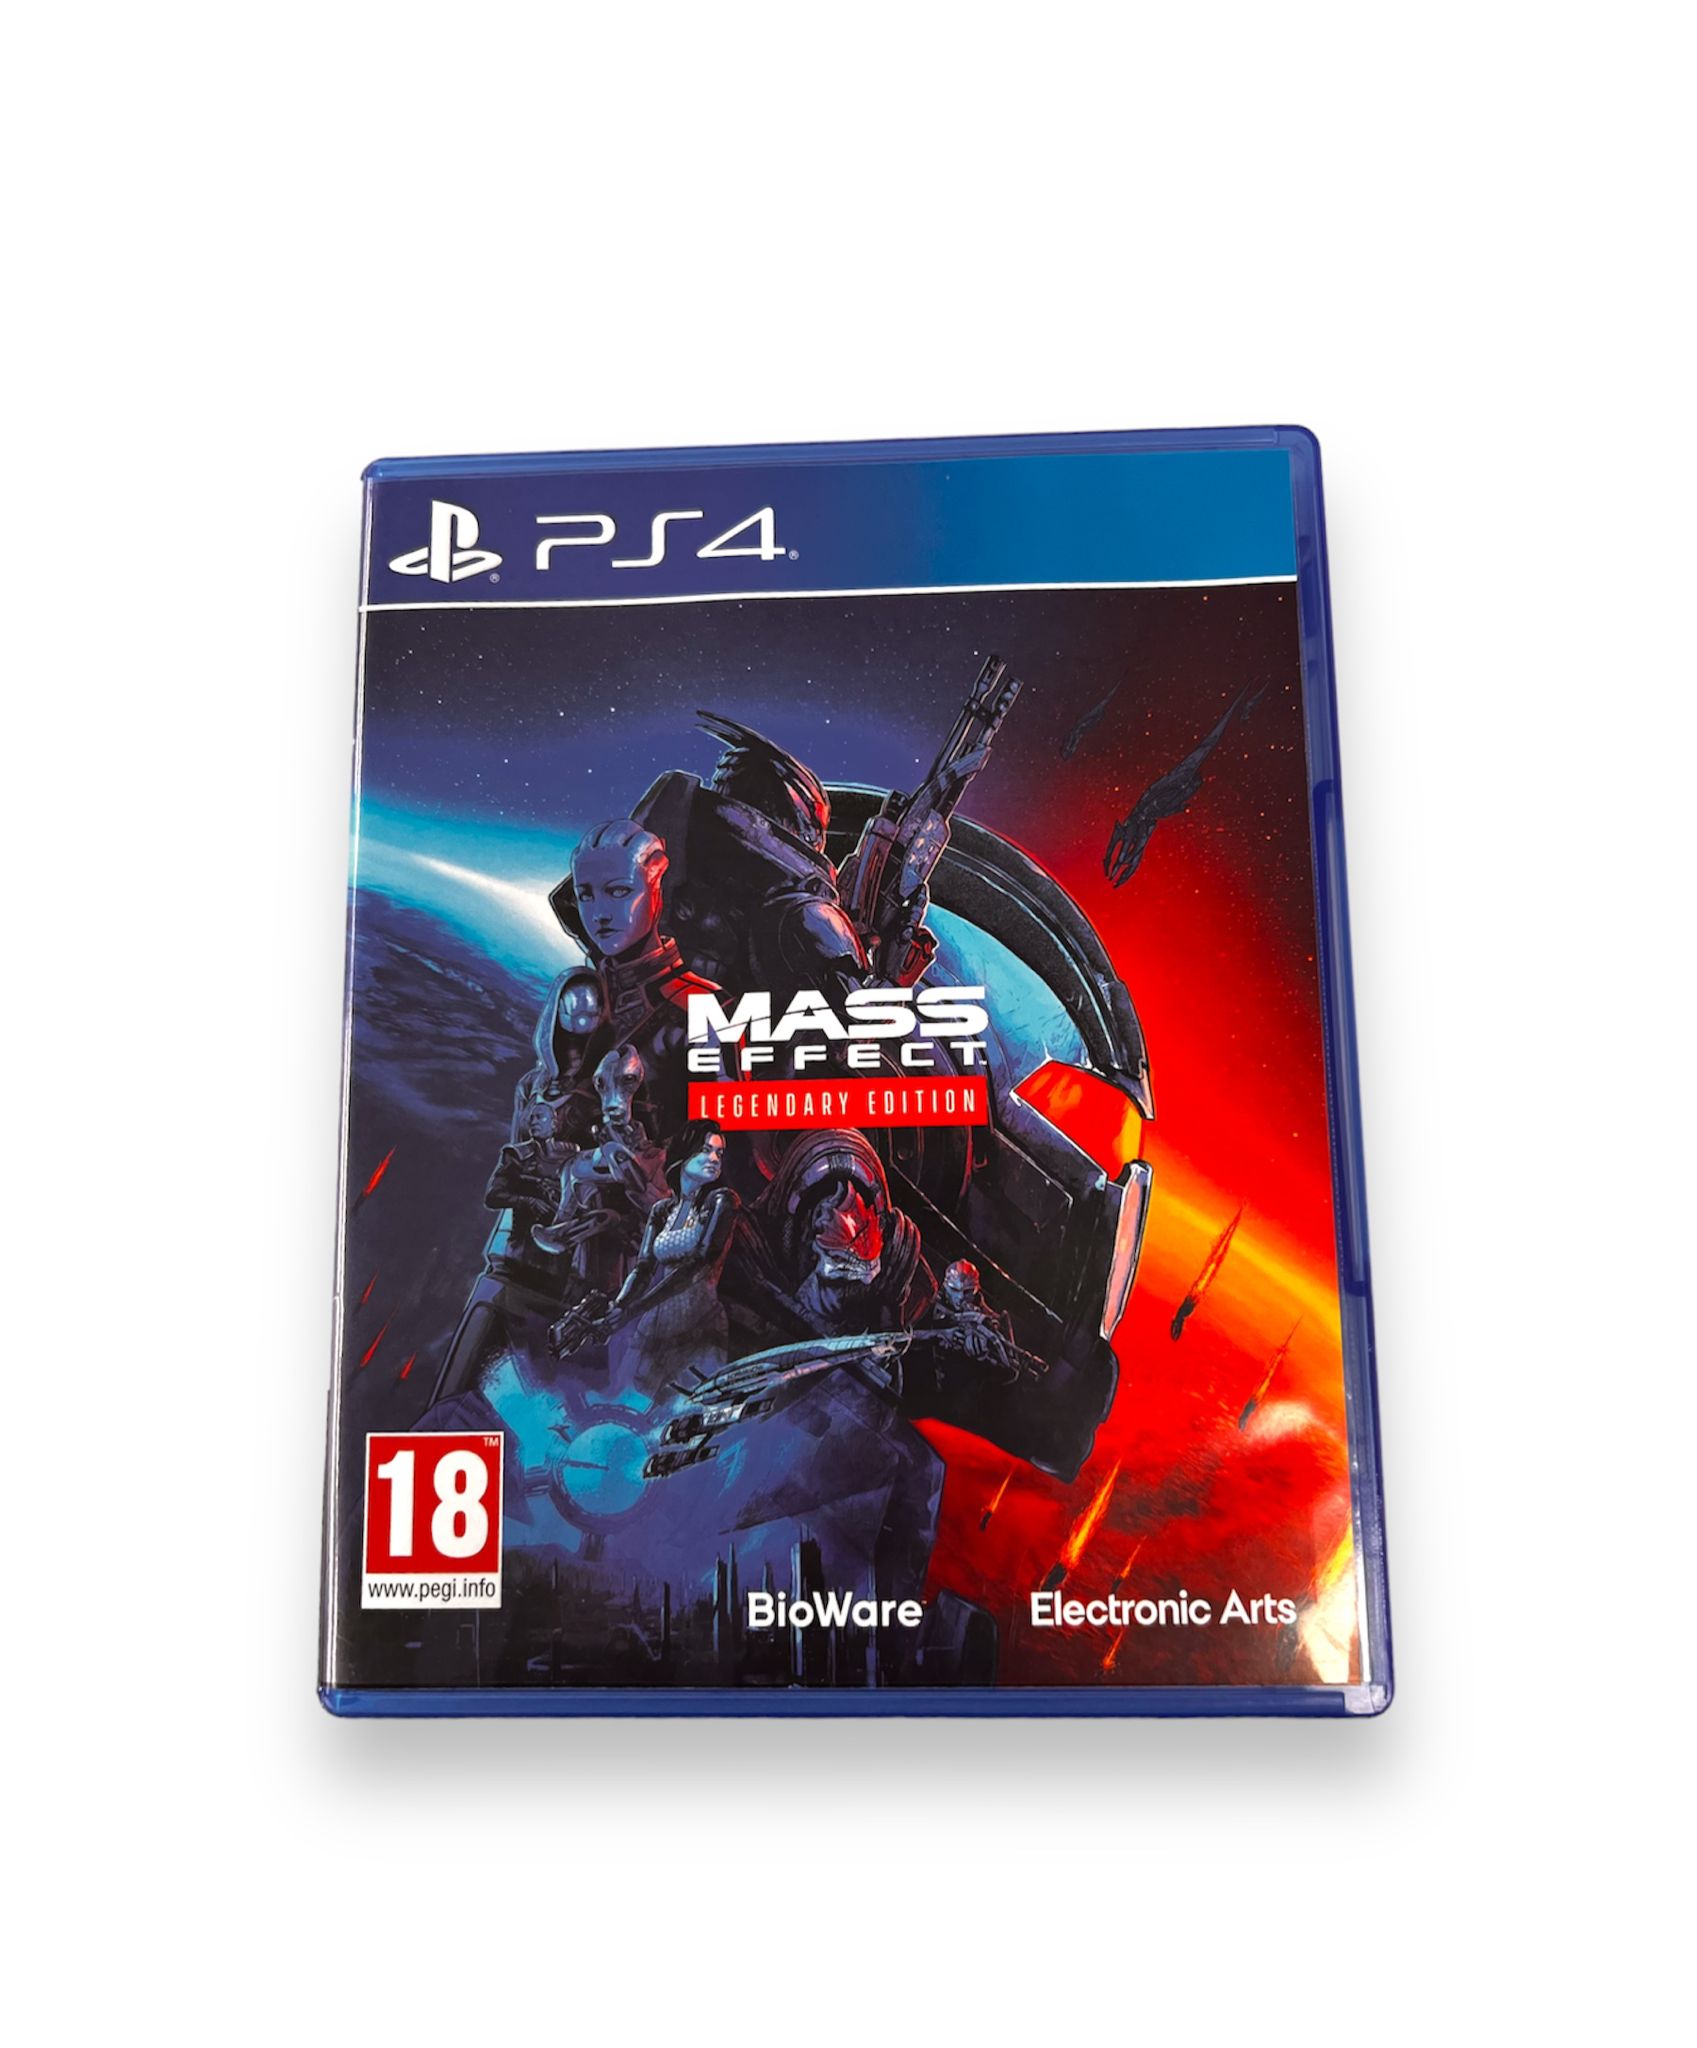 Mass Effect Legendary Edition PS4 game